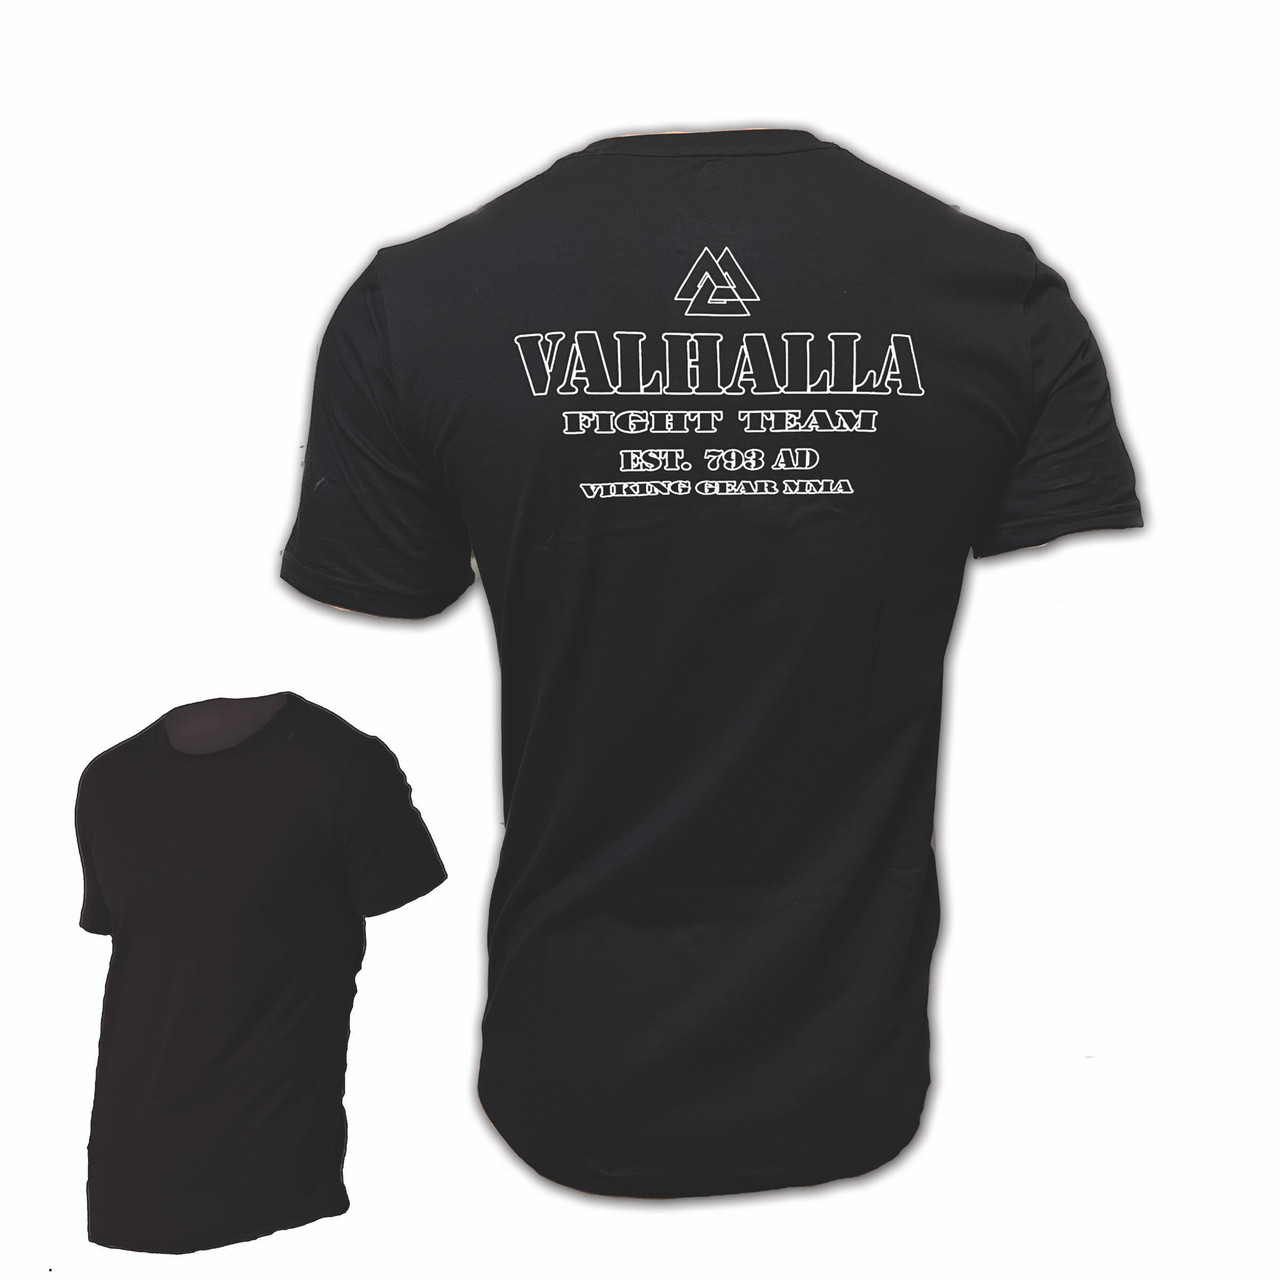 Training To Enter Valhalla SLEEVELESS T-shirt - Viking Ragnarok